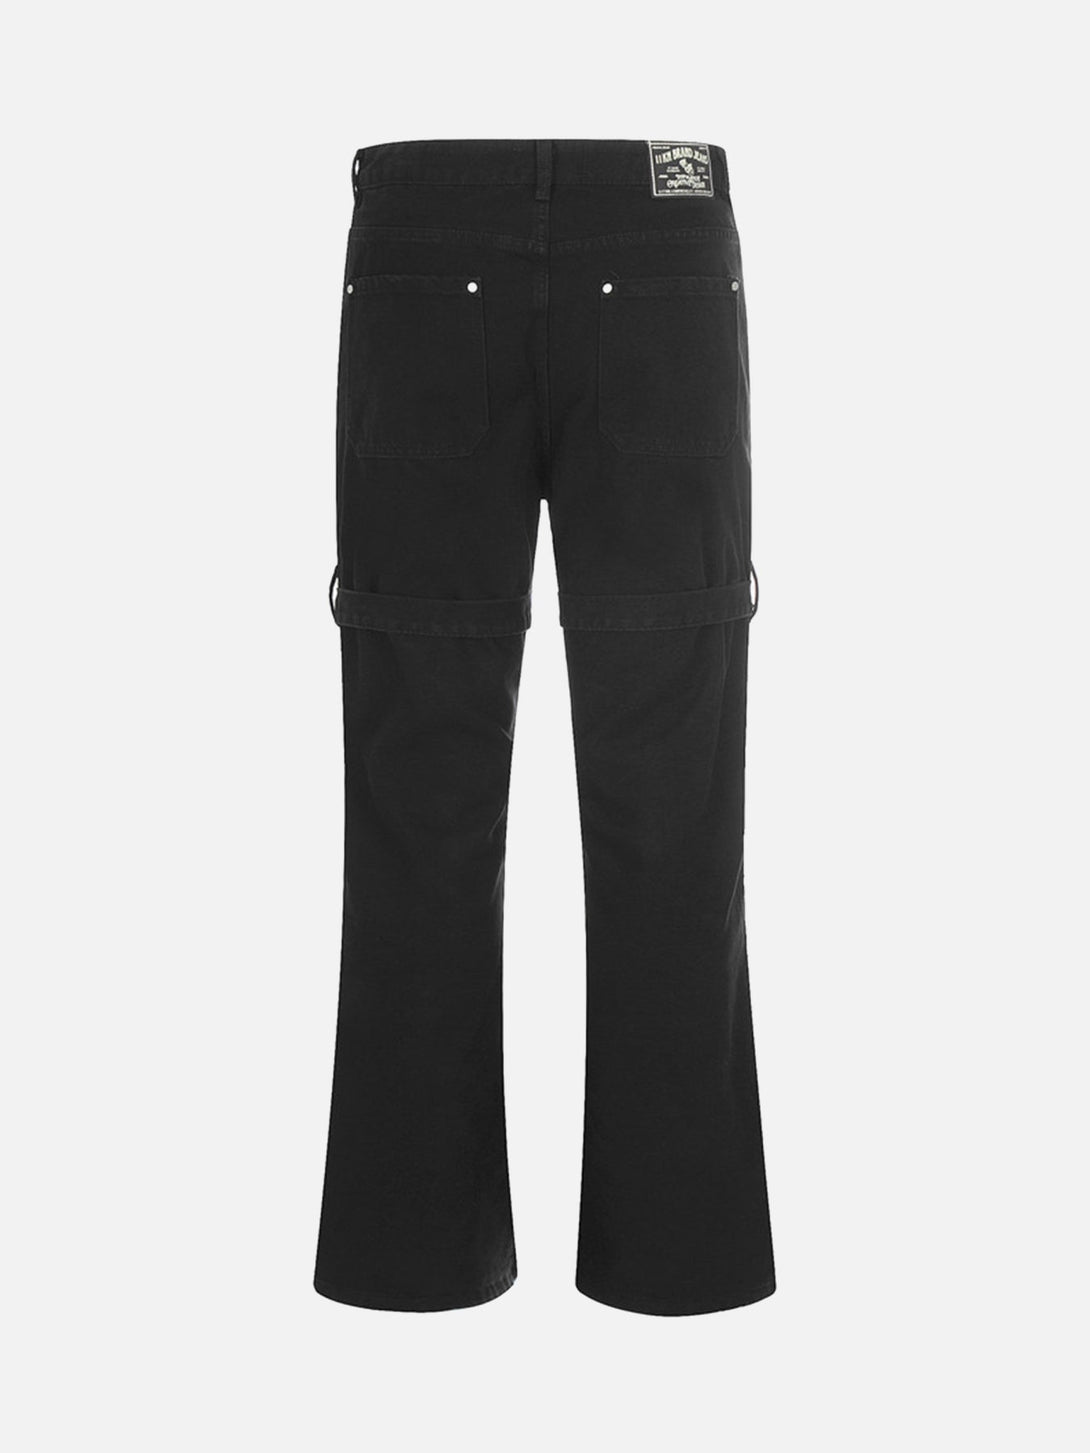 Majesda® - High Street Strappy Design Micro Jeans - 1650- Outfit Ideas - Streetwear Fashion - majesda.com